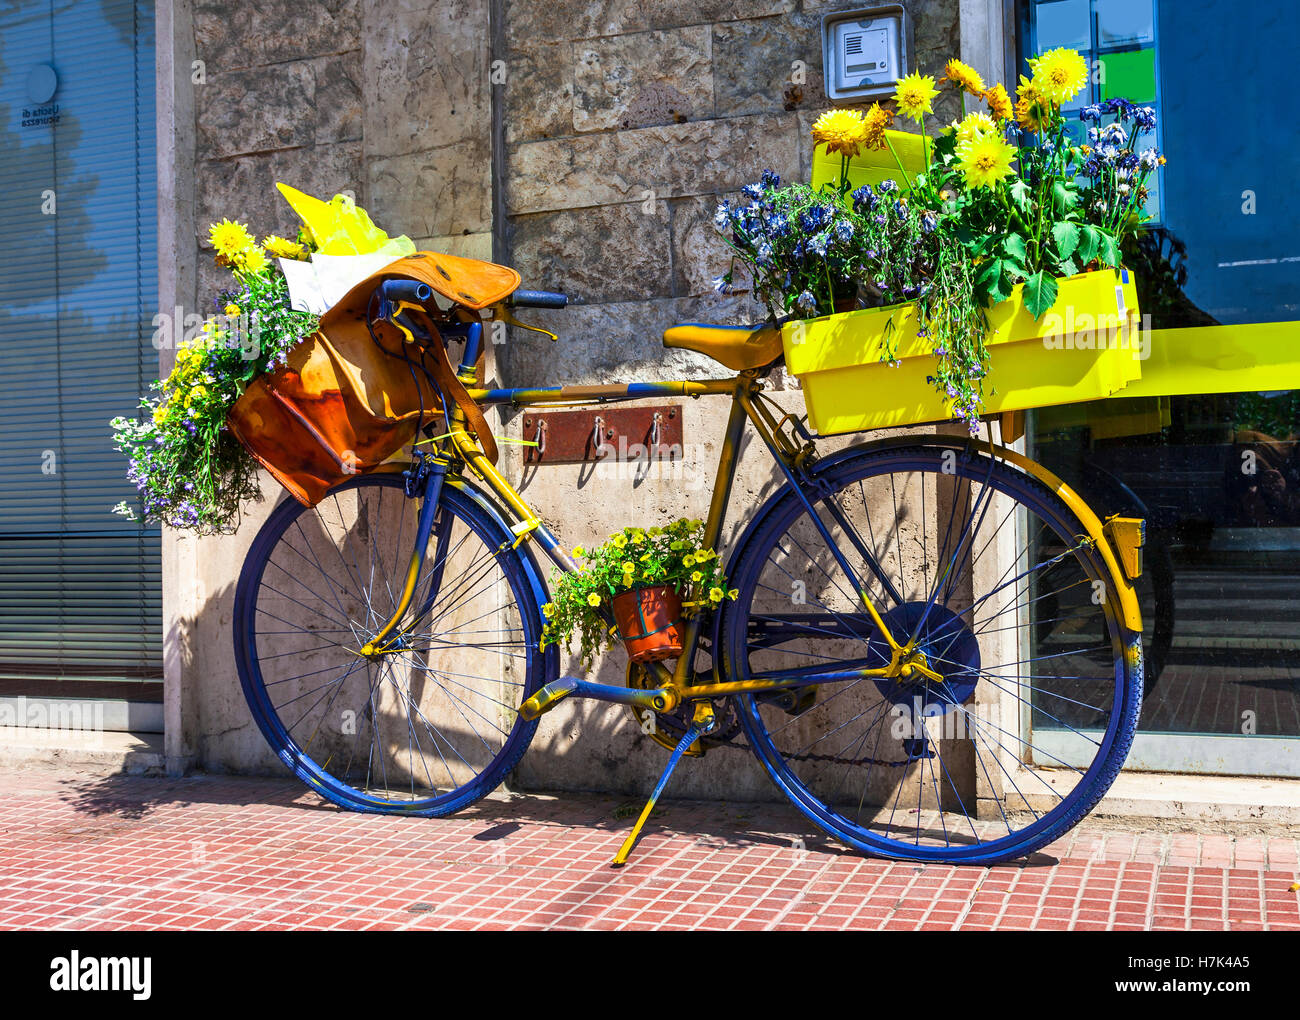 Calles con decoración floral en bicicleta. Foto de stock